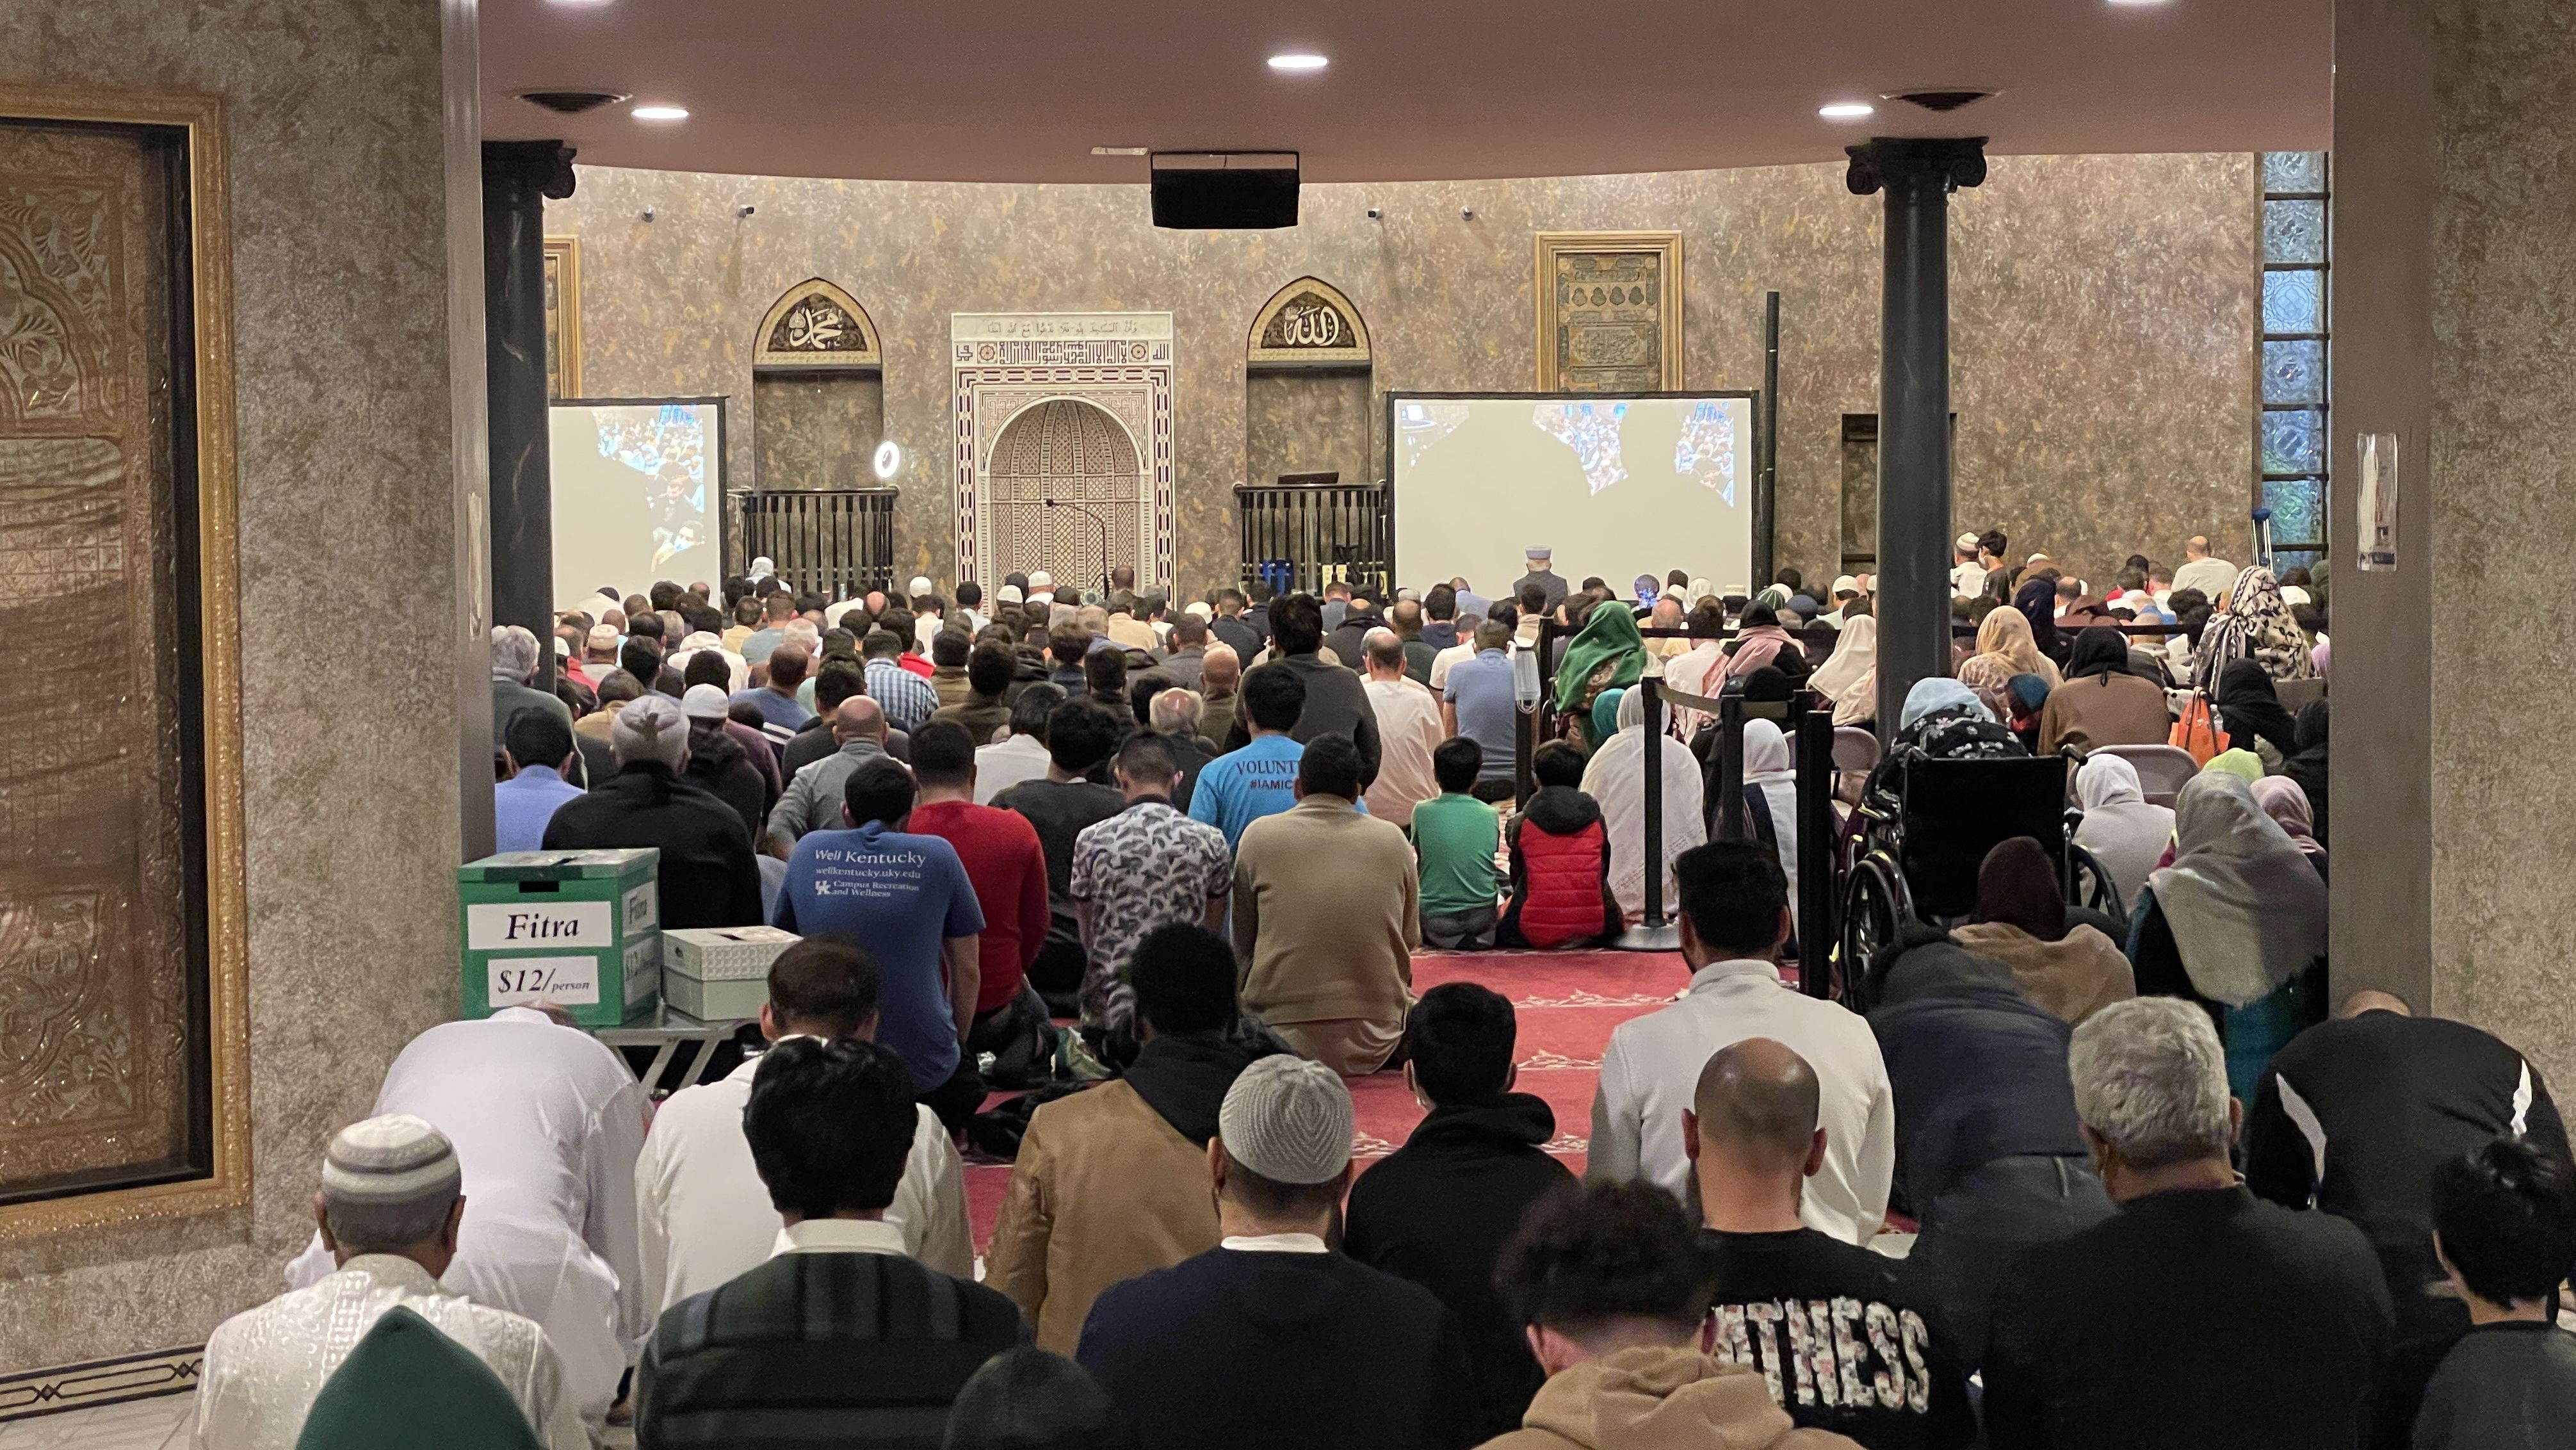 Islamic Center of Greater Cincinnati during Ramadan services